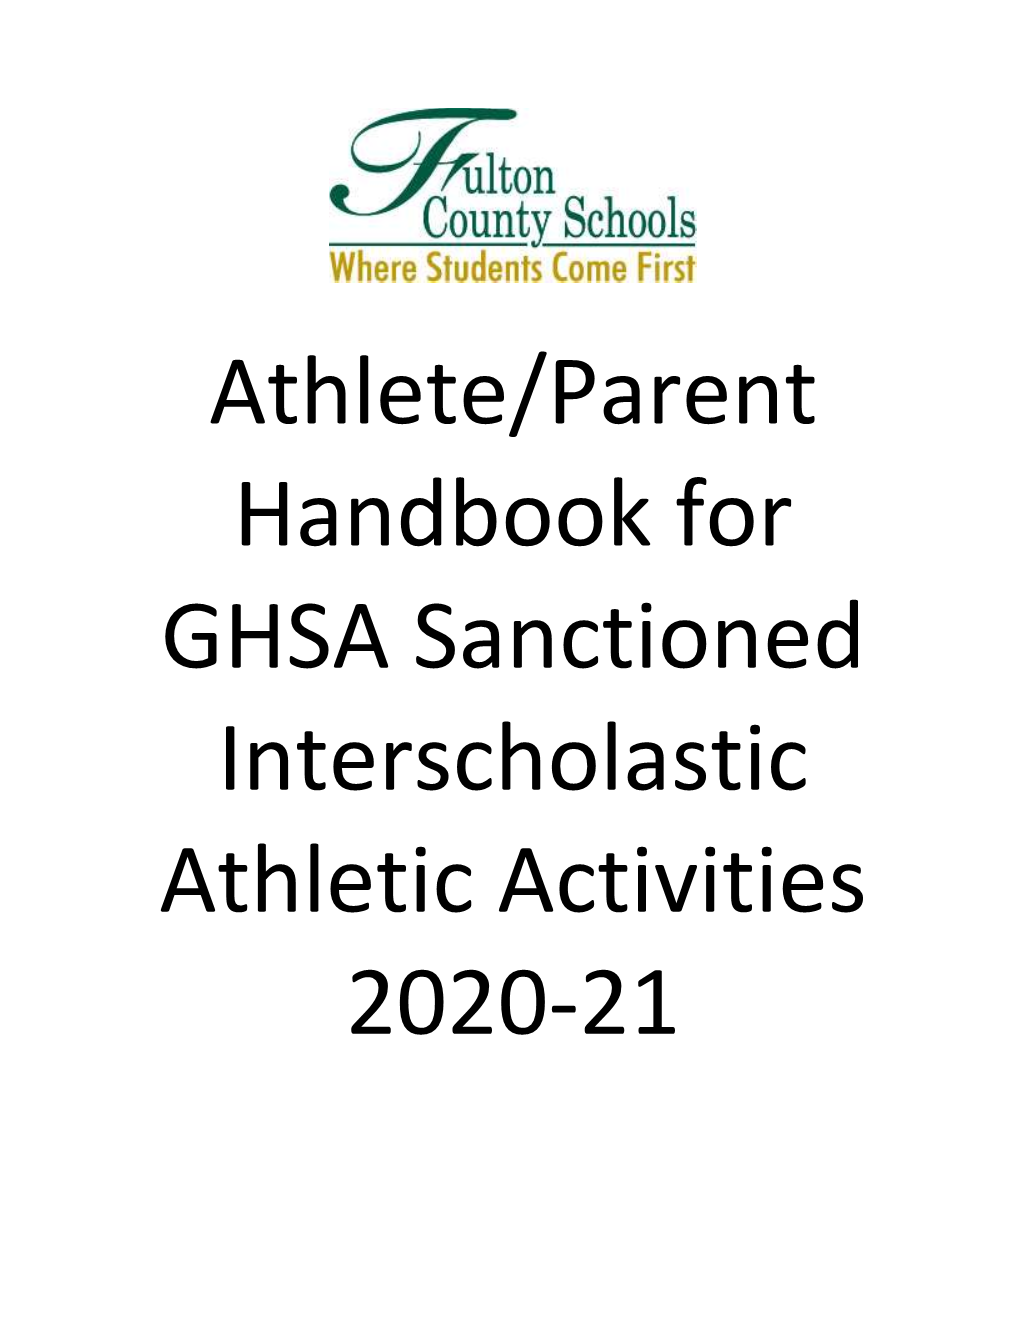 Athlete/Parent Handbook for GHSA Sanctioned Interscholastic Athletic Activities 2020-21